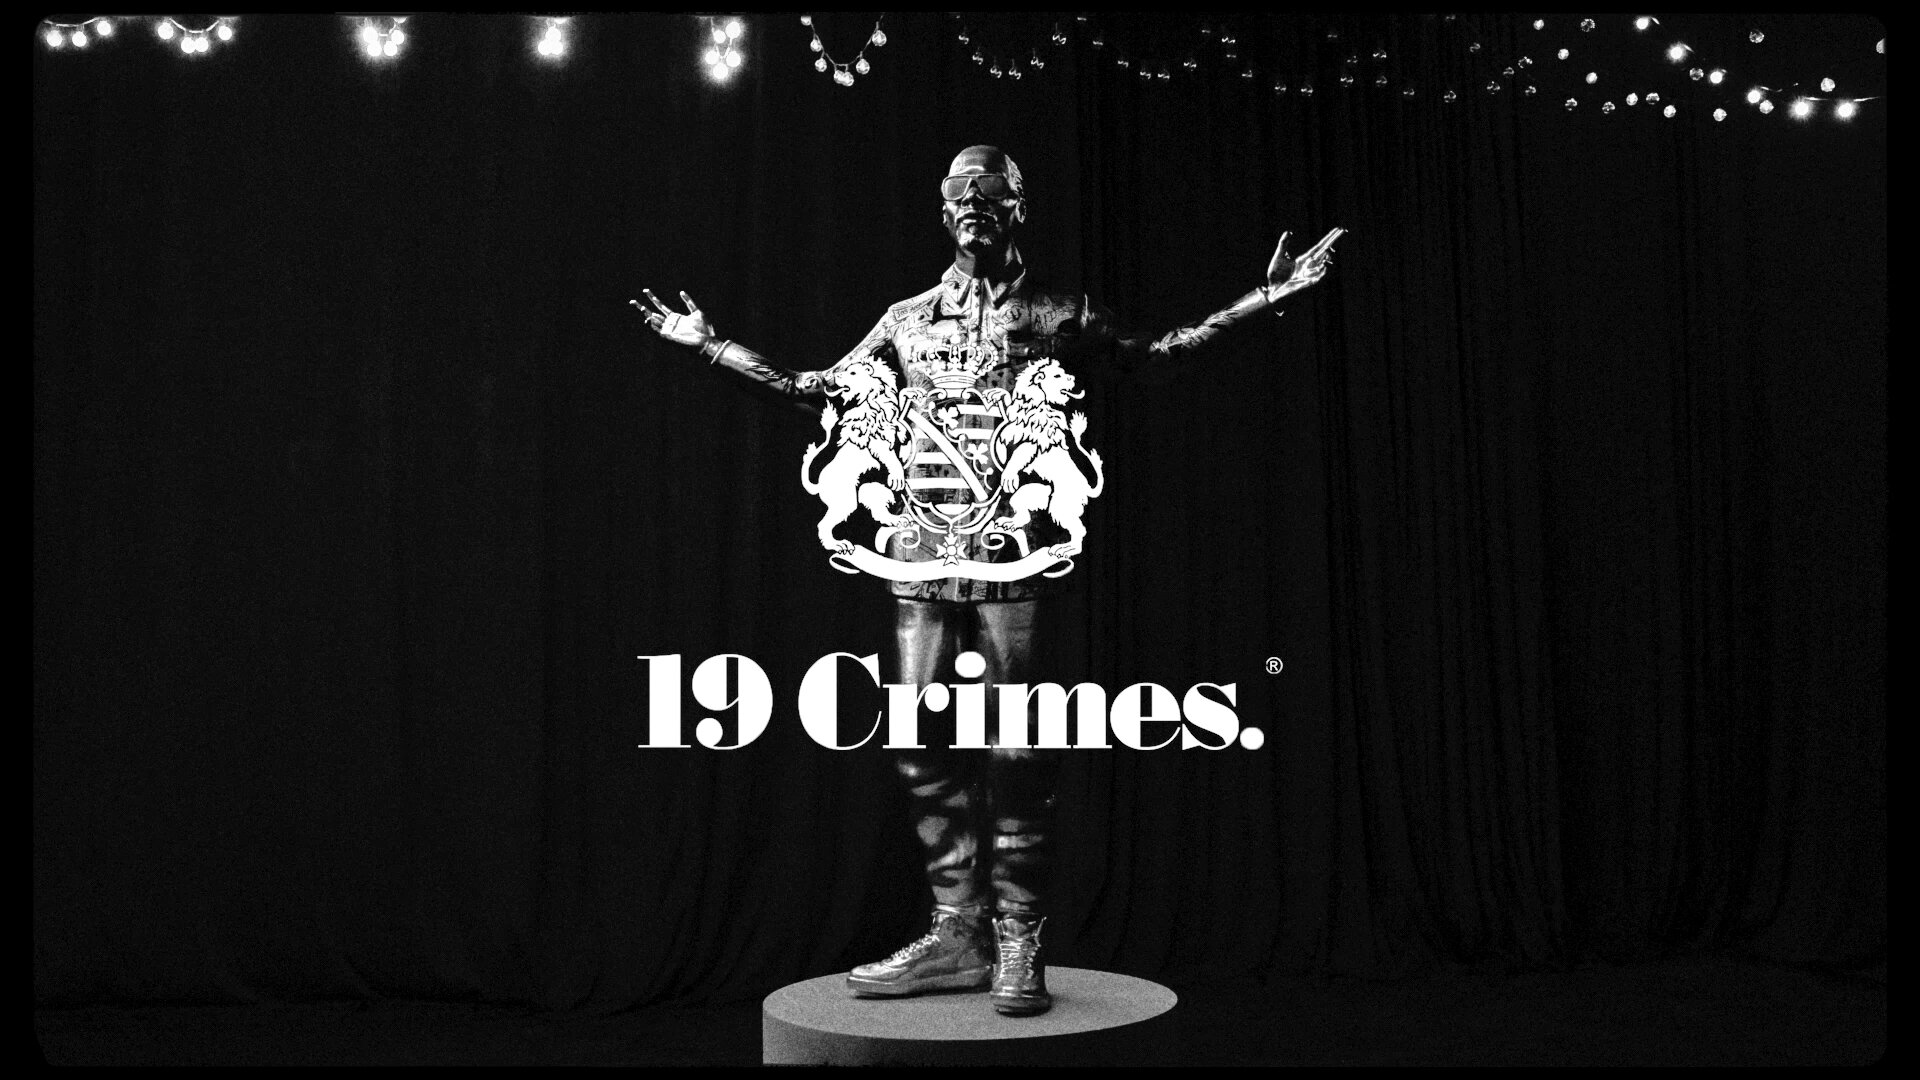 Snoop Dogg x 19 Crimes Art installation